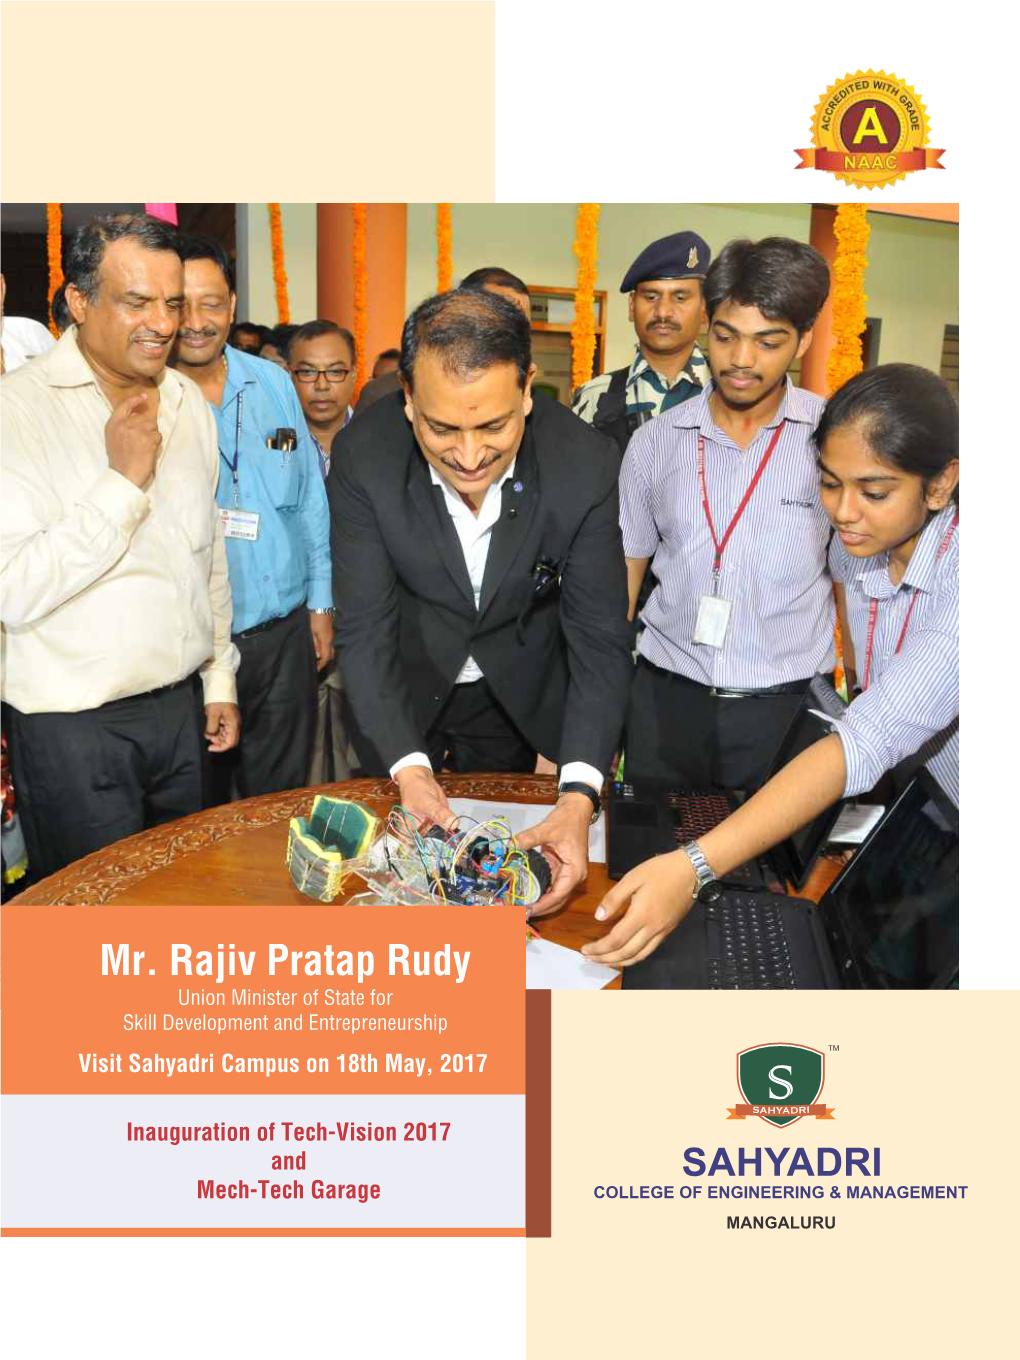 Mr. Rajiv Pratap Rudy Union Minister of State for Skill Development and Entrepreneurship TM Visit Sahyadri Campus on 18Th May, 2017